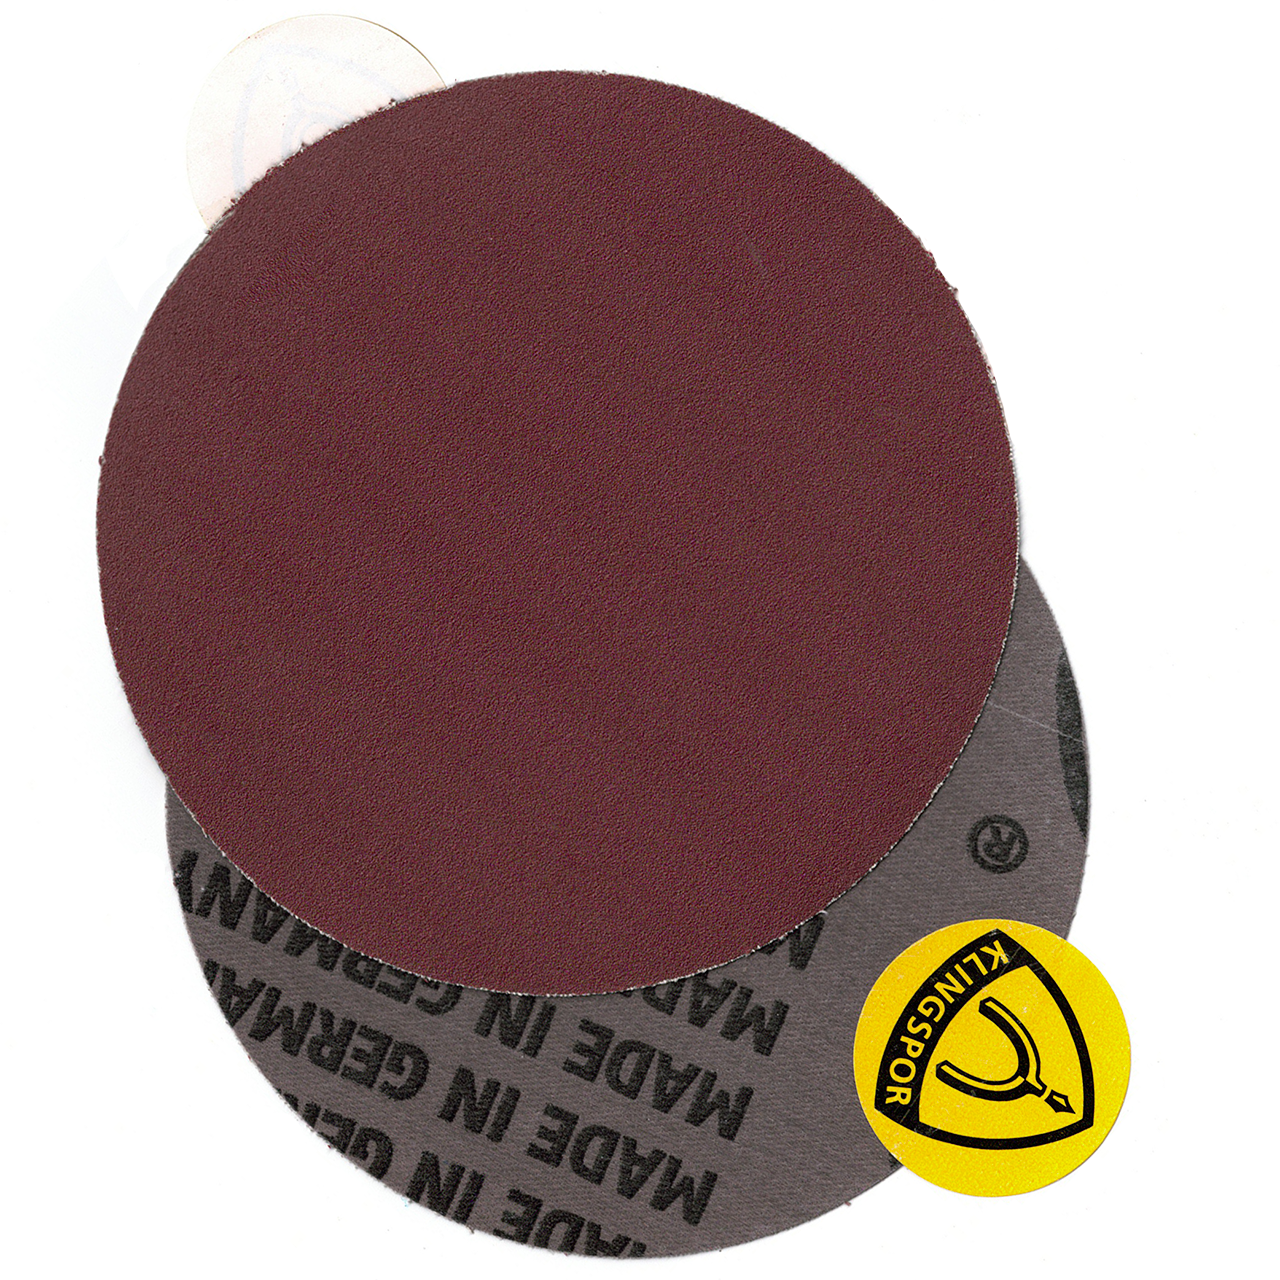 Klingspor Abrasives 24" No Hole, Cloth Backed, Pressure Sensitive Adhesive, 220 Grit Disc